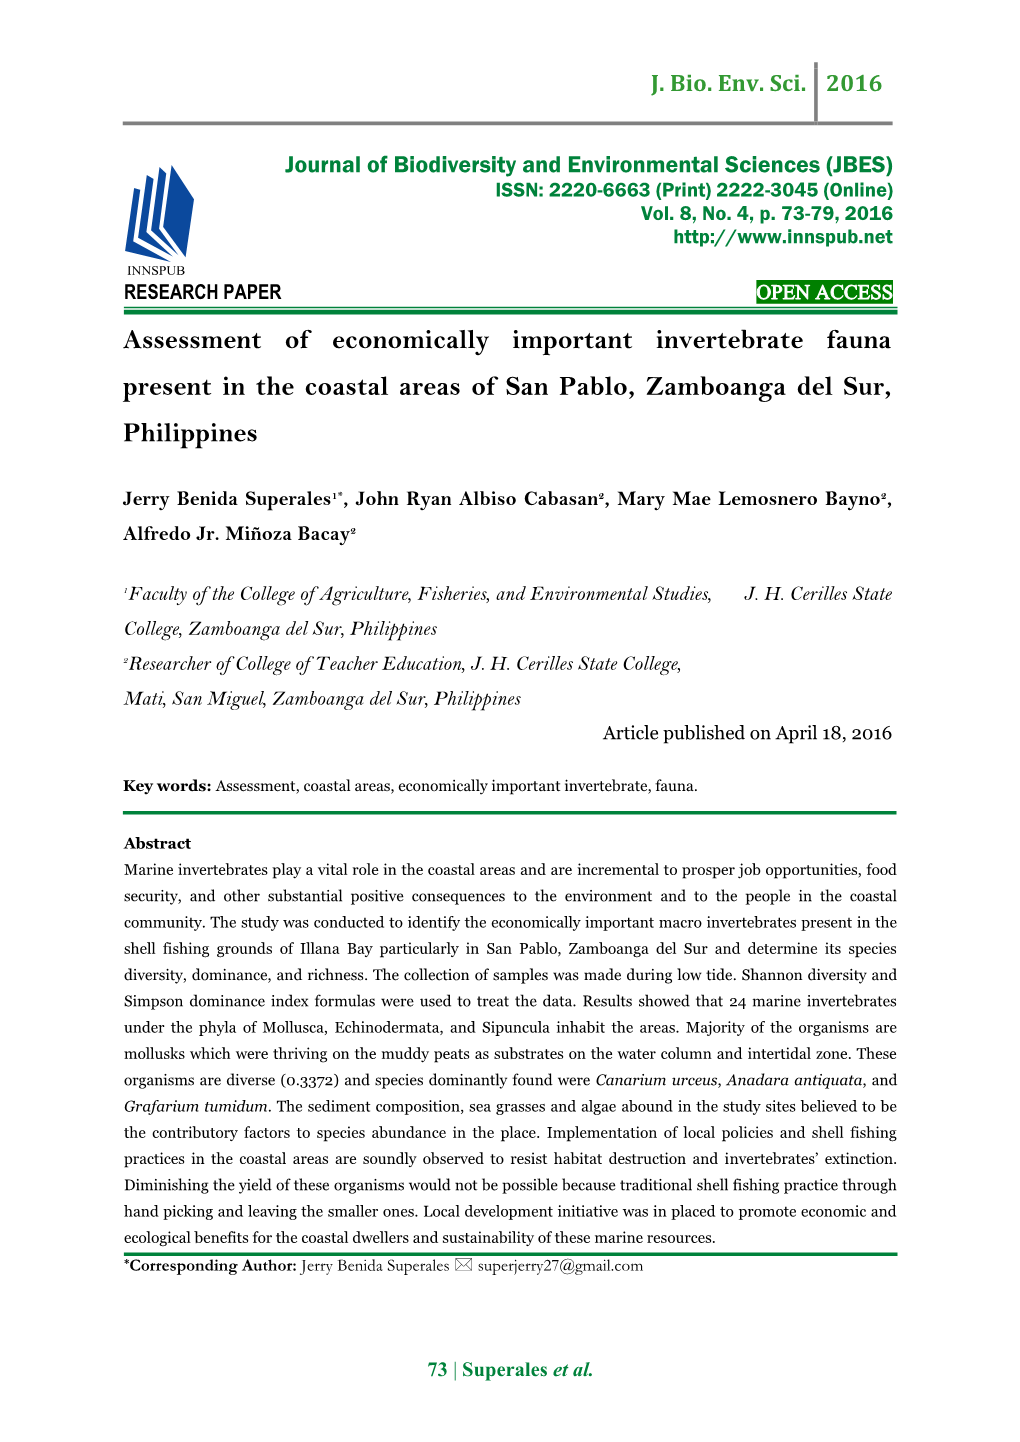 Assessment of Economically Important Invertebrate Fauna Present in the Coastal Areas of San Pablo, Zamboanga Del Sur, Philippines